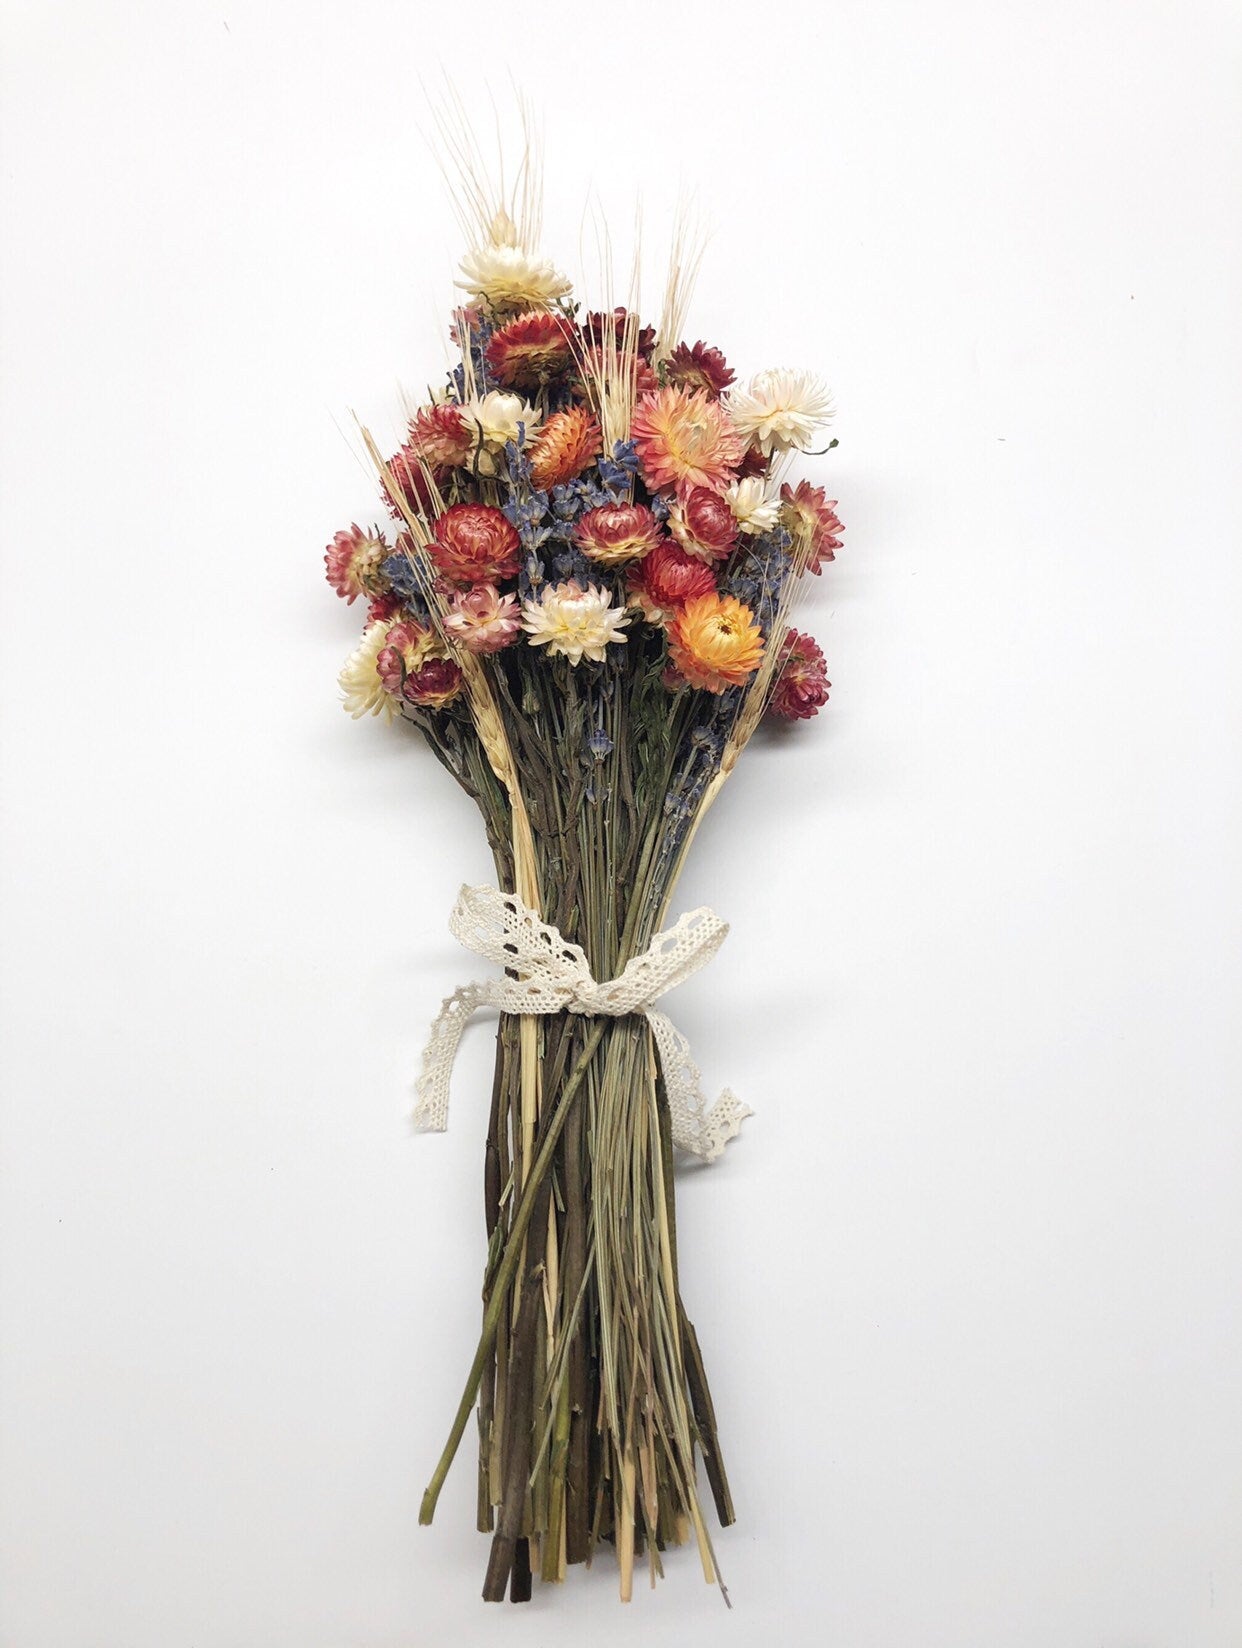 Floral Bouquet, Preserved Flower, Wedding, Anniversary gift, Fire Red Strawflower, White Strawflower, Lavender, Blonde Wheat, Gift